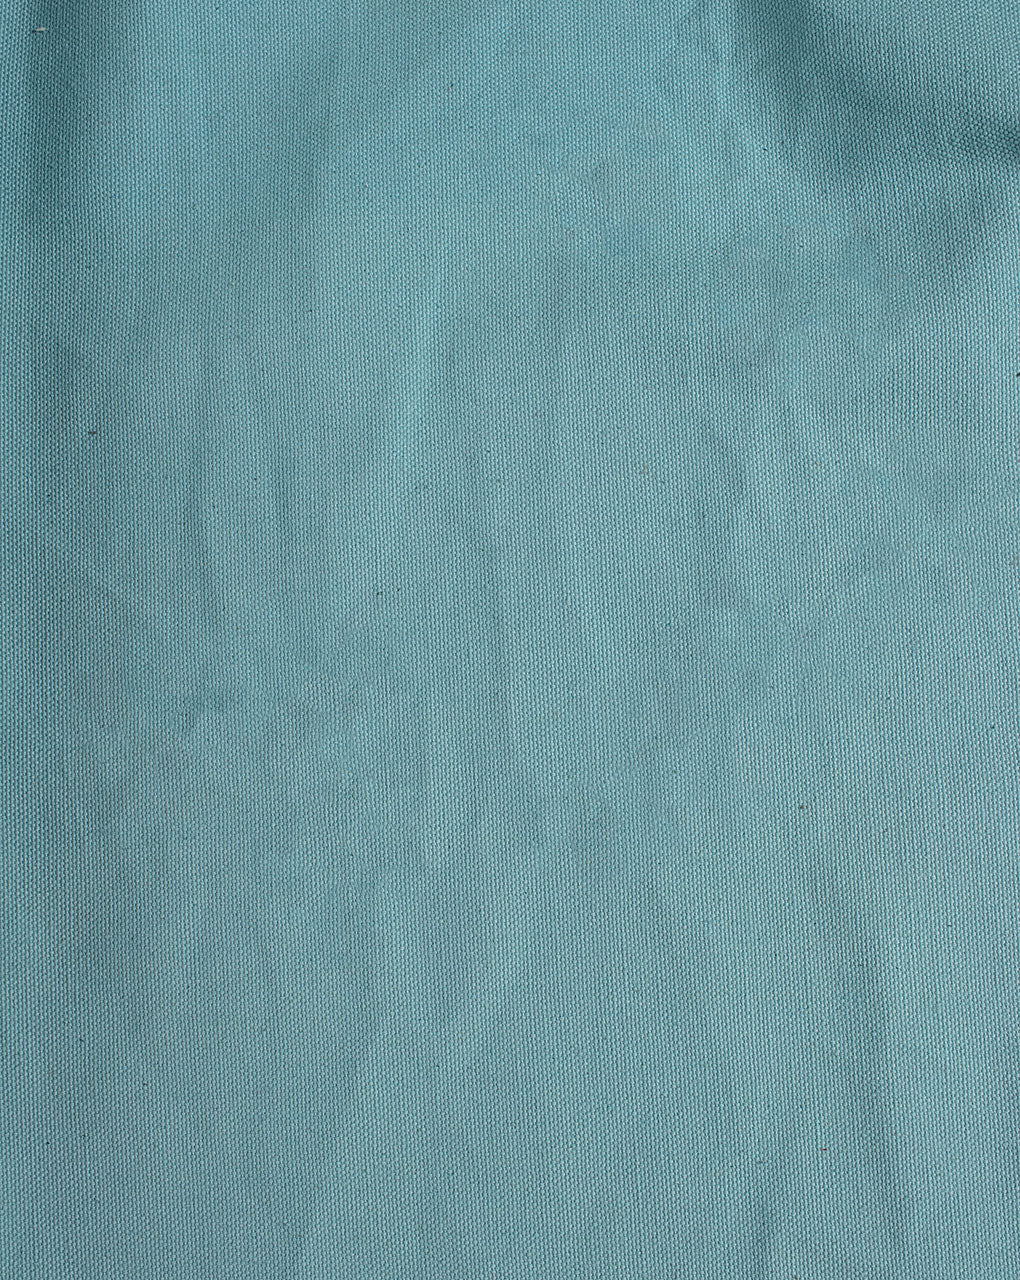 Turquoise Plain Cotton Duck Fabric